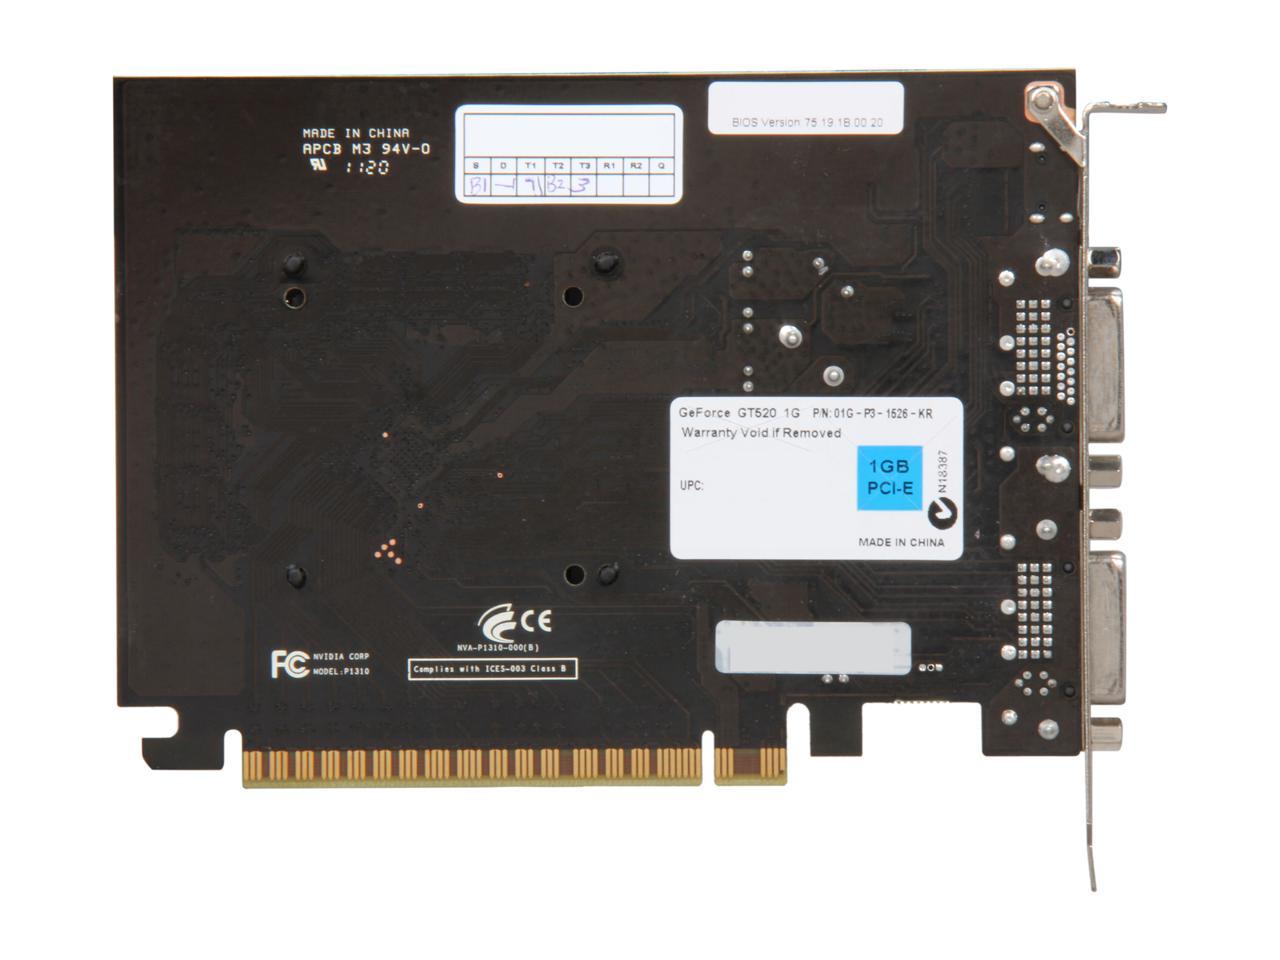 EVGA GeForce GT 520 (Fermi) DirectX 12 (feature level 11_0) 01G-P3-1526-KR 1GB 64-Bit DDR3 PCI Express 2.0 x16 HDCP Ready Video Card